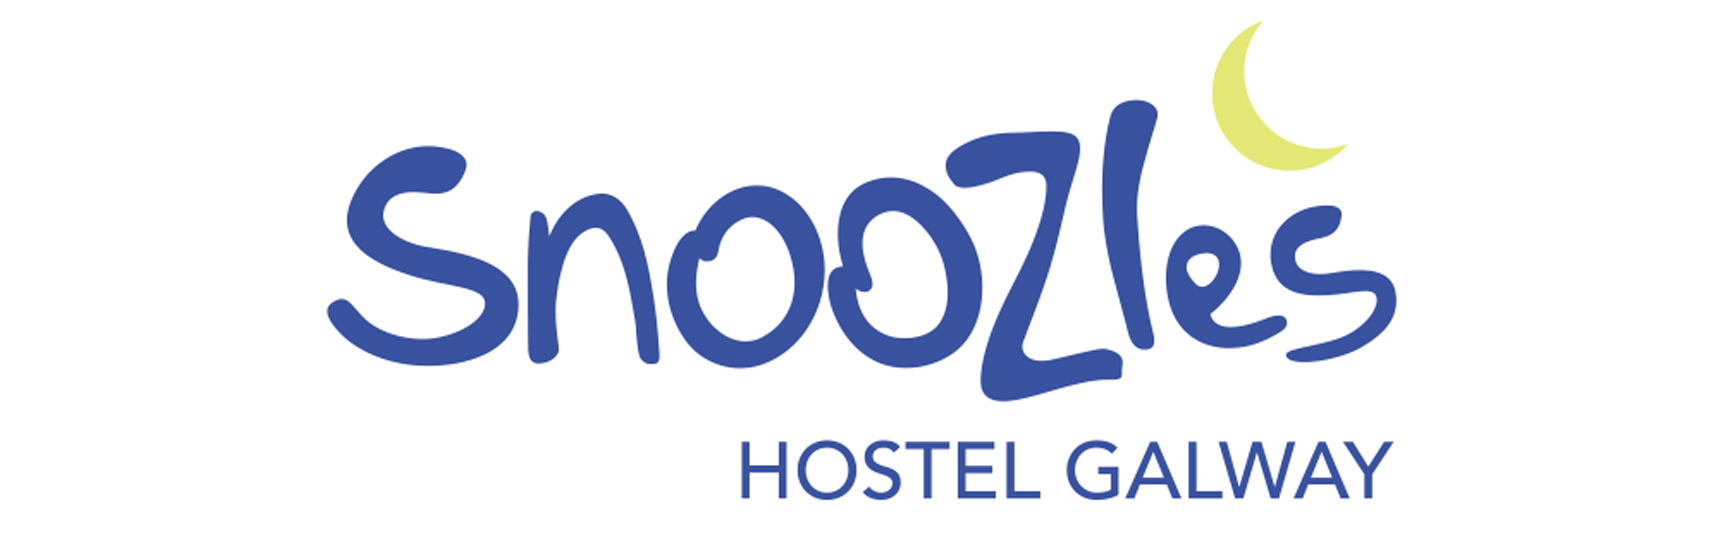 Snoozles Logo CR web